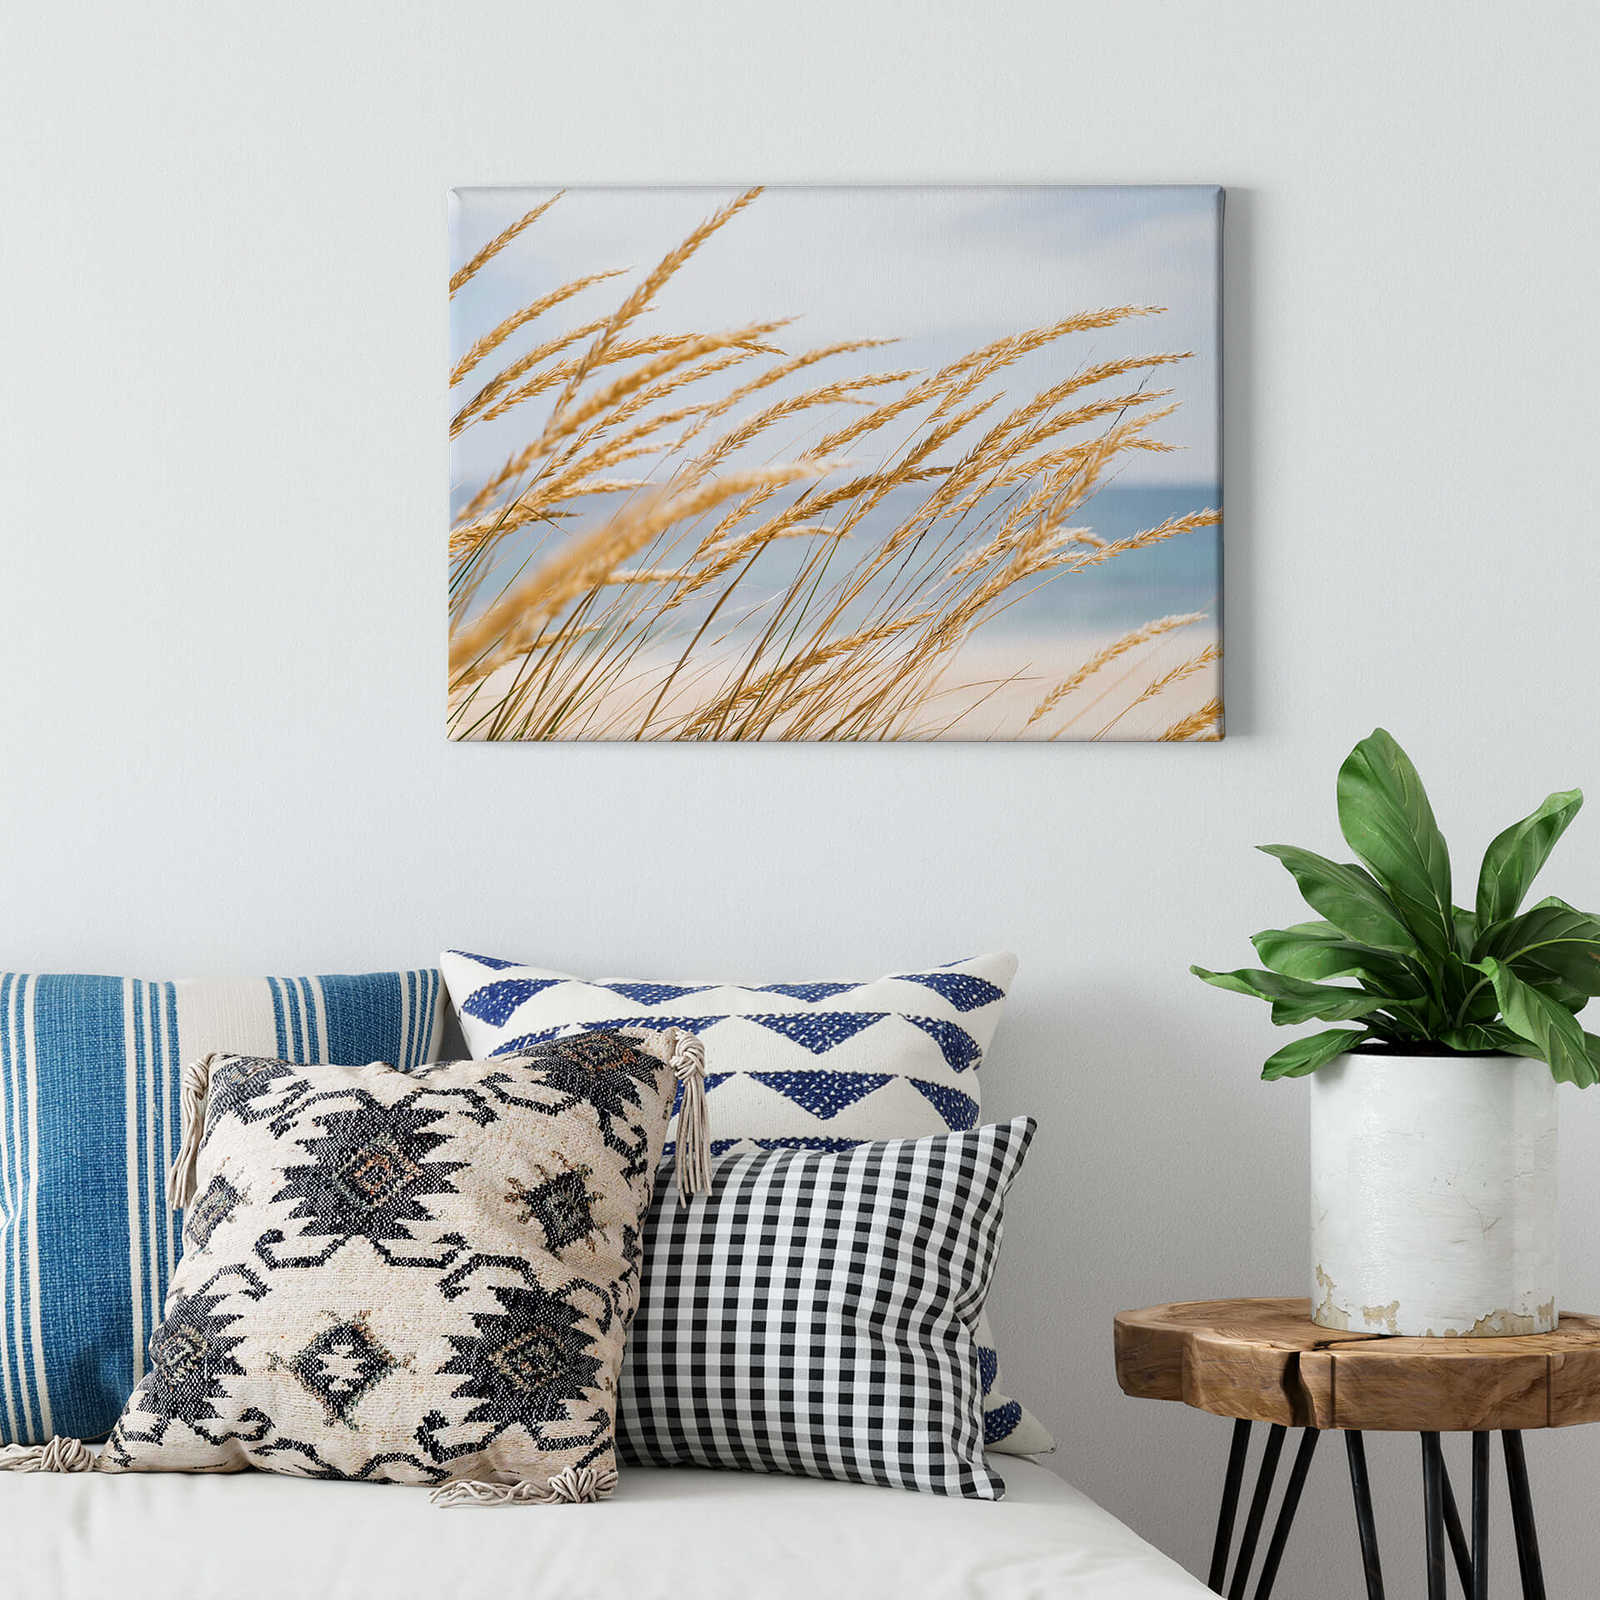             Canvas print dune grass on the beach – blue, beige
        